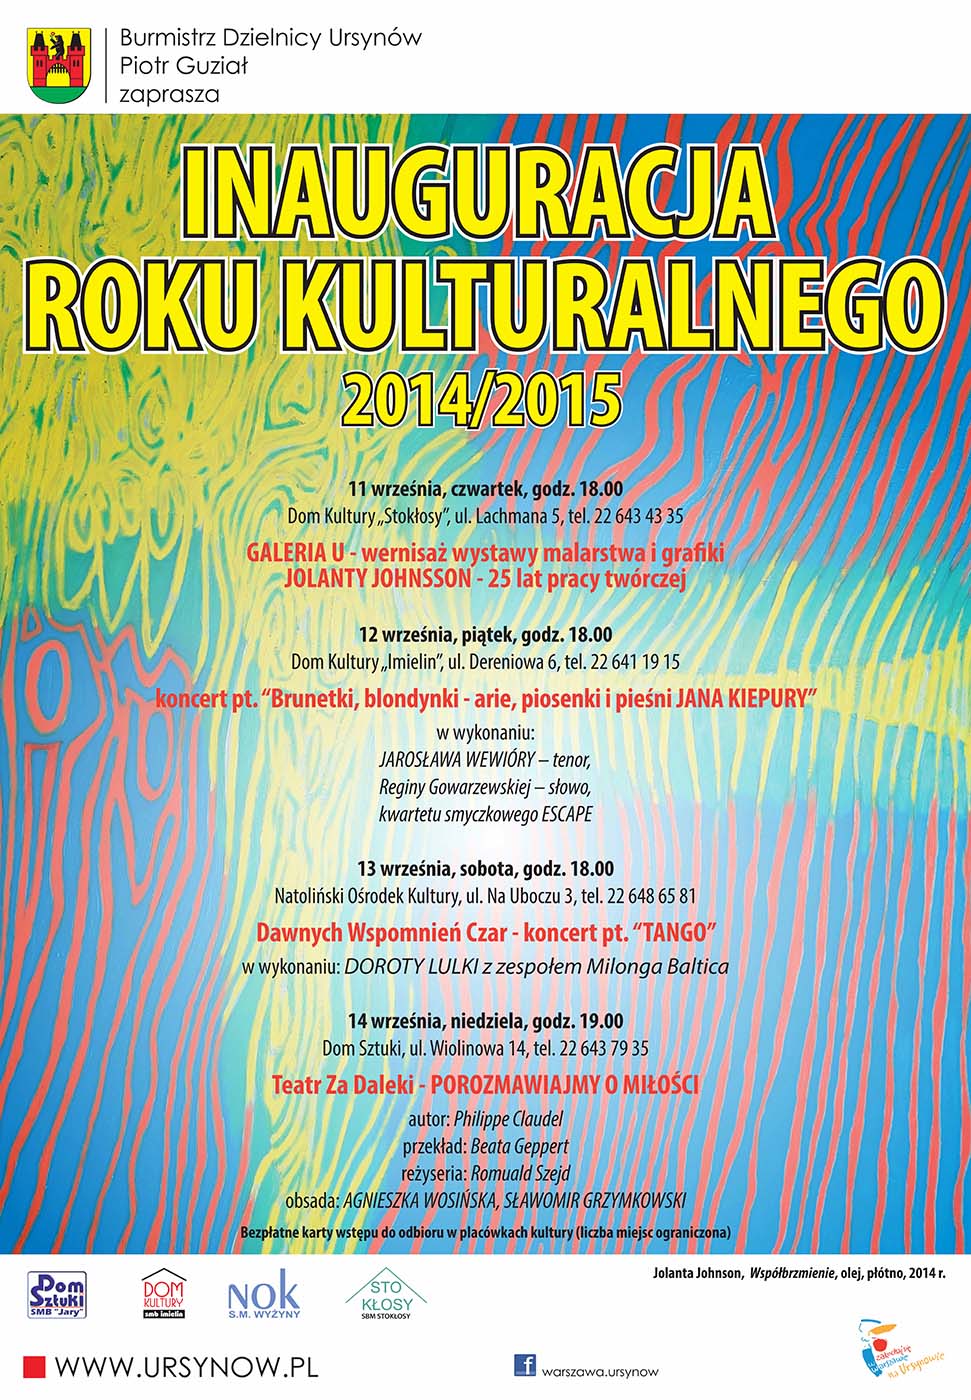 Inauguracja roku kulturalnego 2014/2015